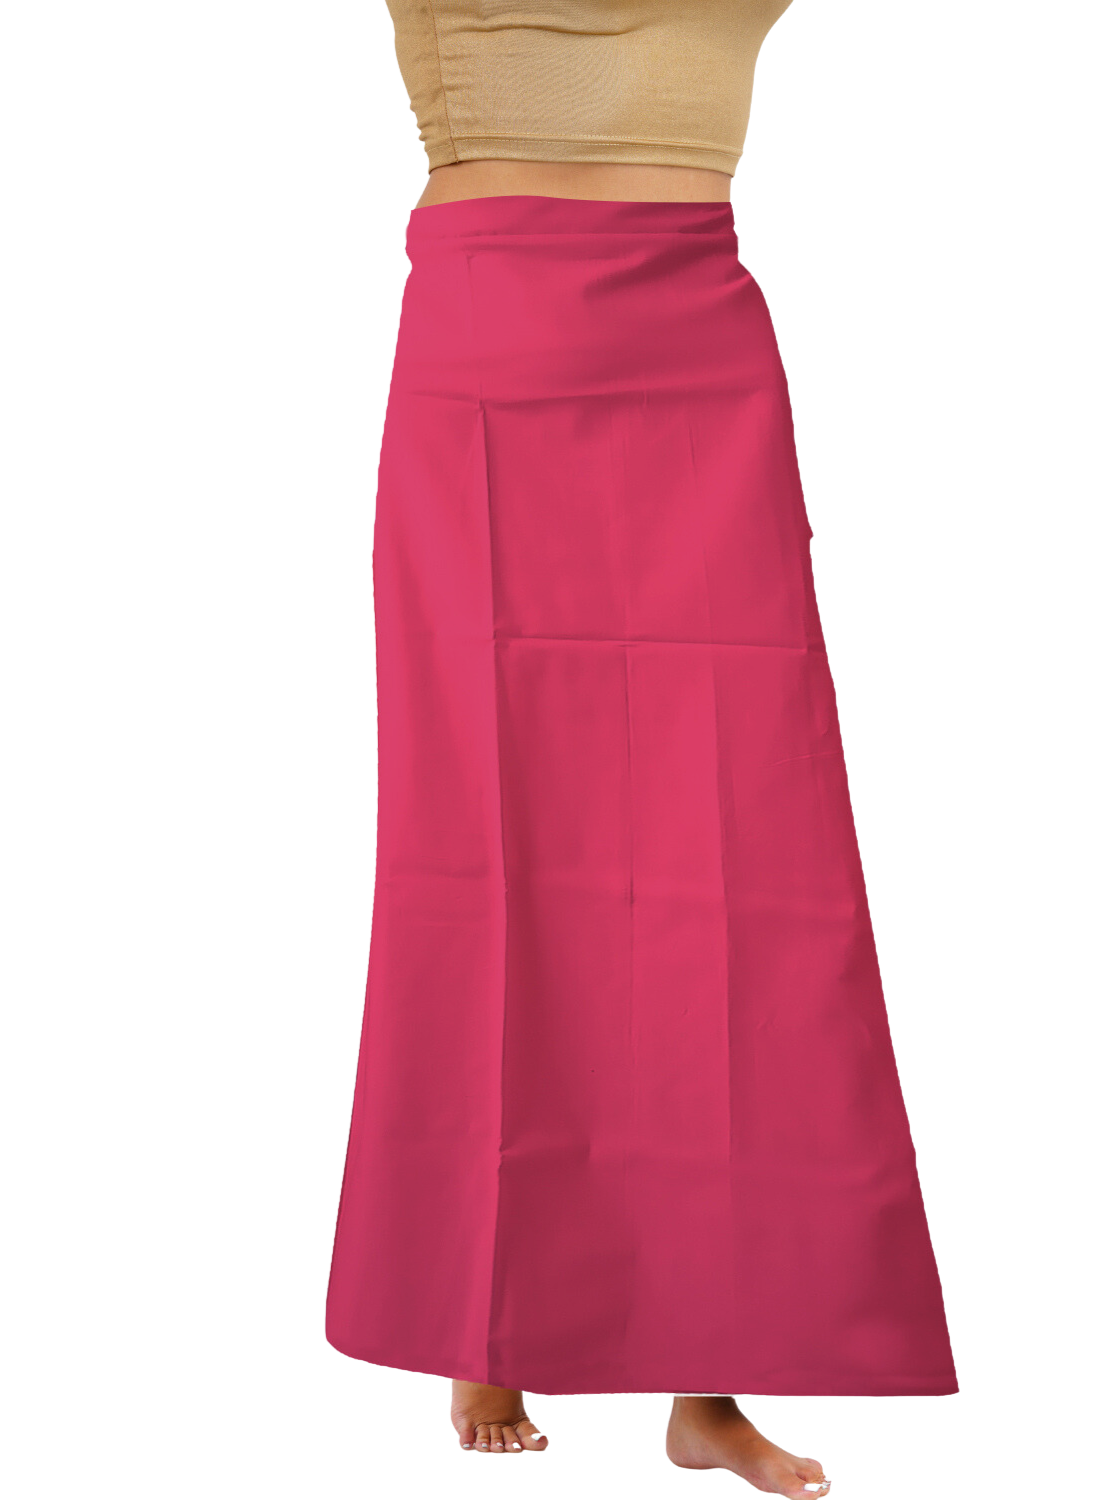 MANGAI Premium Elegant Cotton Petticoats - 7 Part | Premium Branded Women's Cotton Embroidery Petticoats